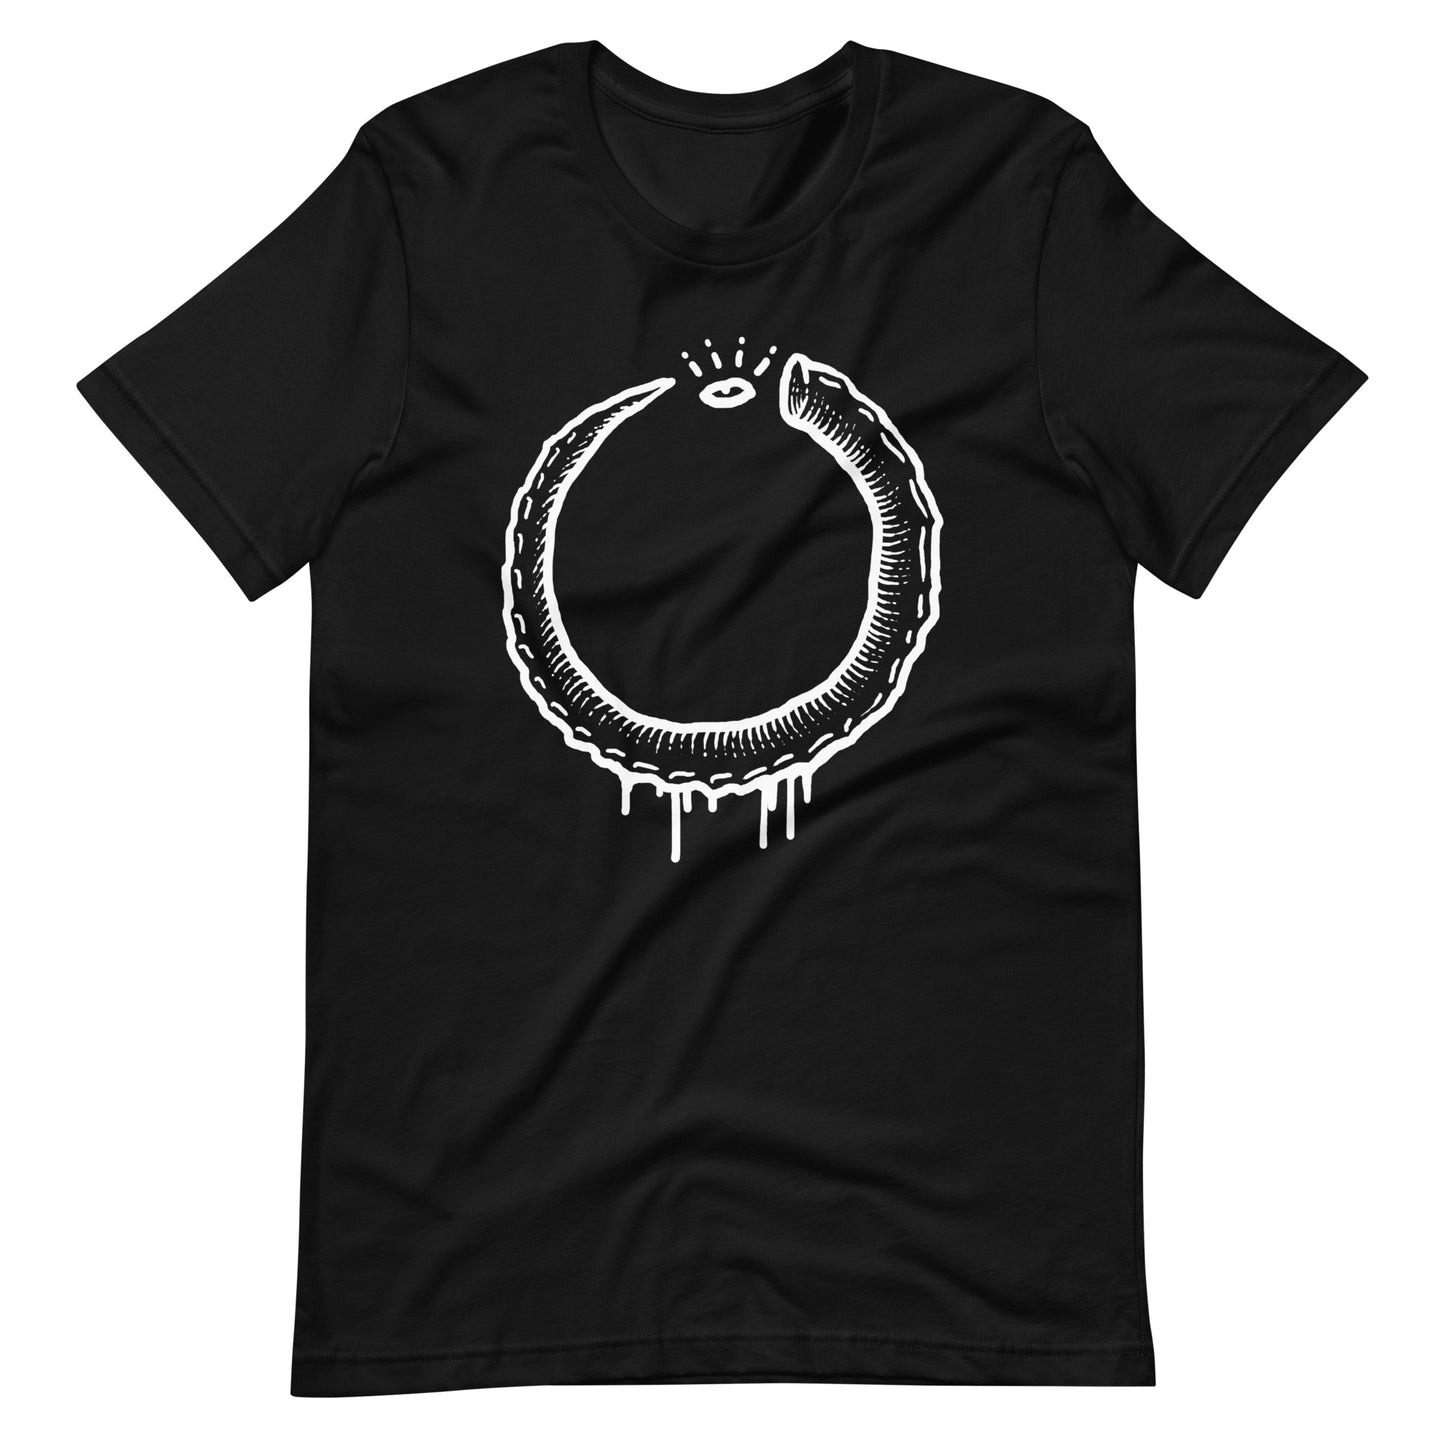 Horns - Men's t-shirt - Black Front